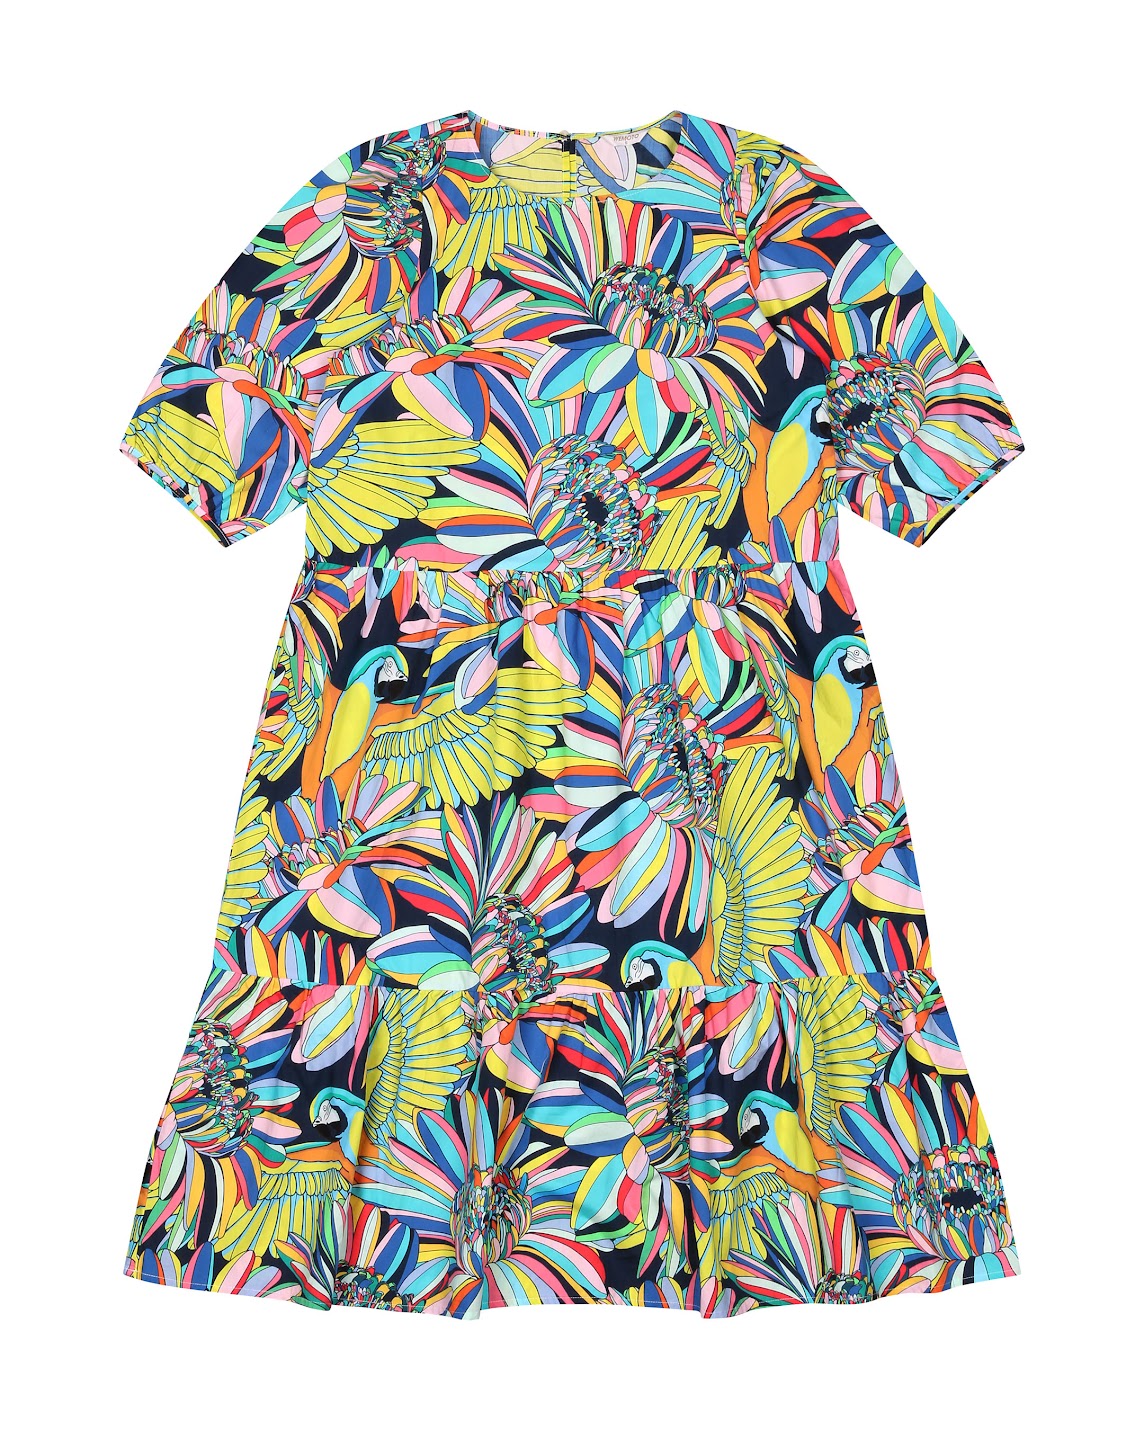 WEMOTO - Tilda Dress - Multicolor